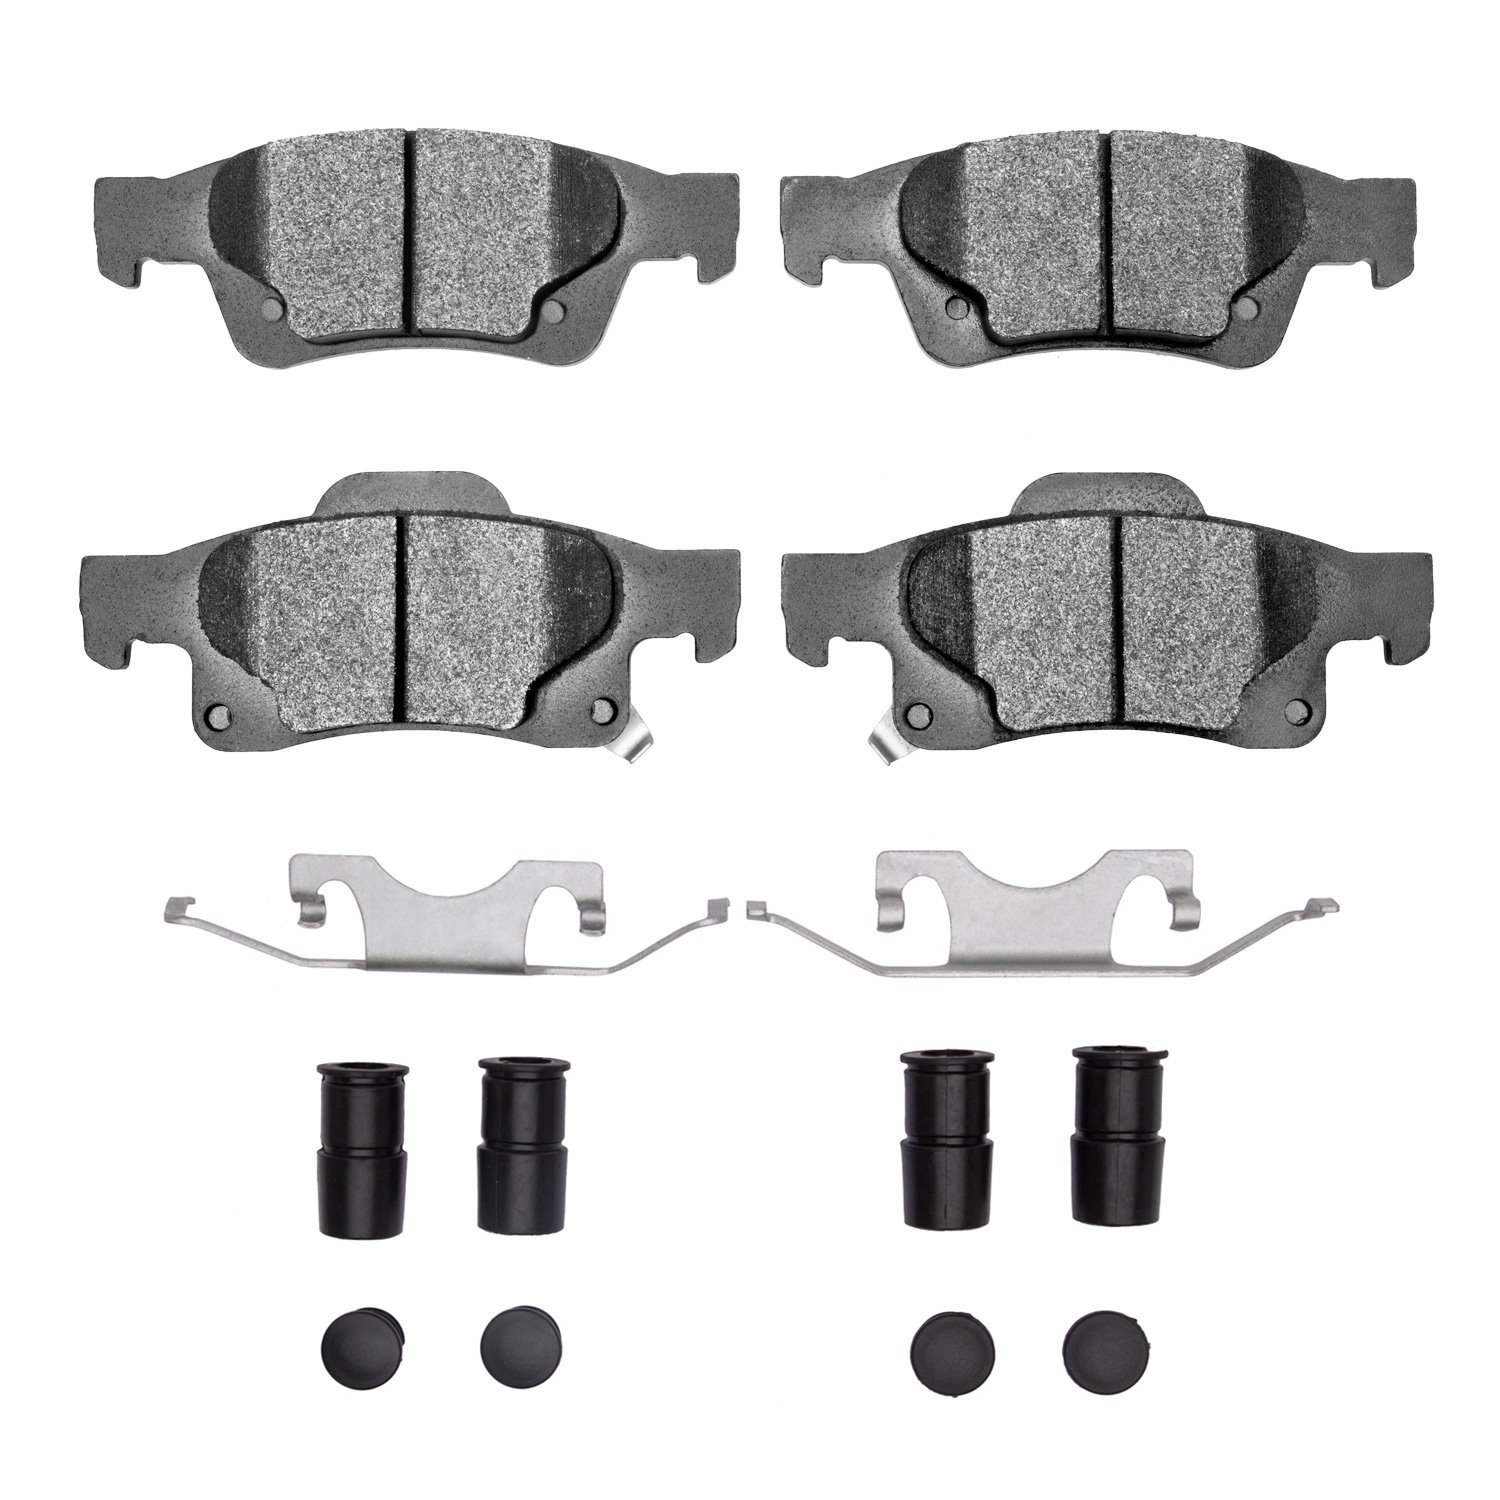 Ceramic Brake Pads & Hardware Kit, Fits Select Mopar, Position: Rear